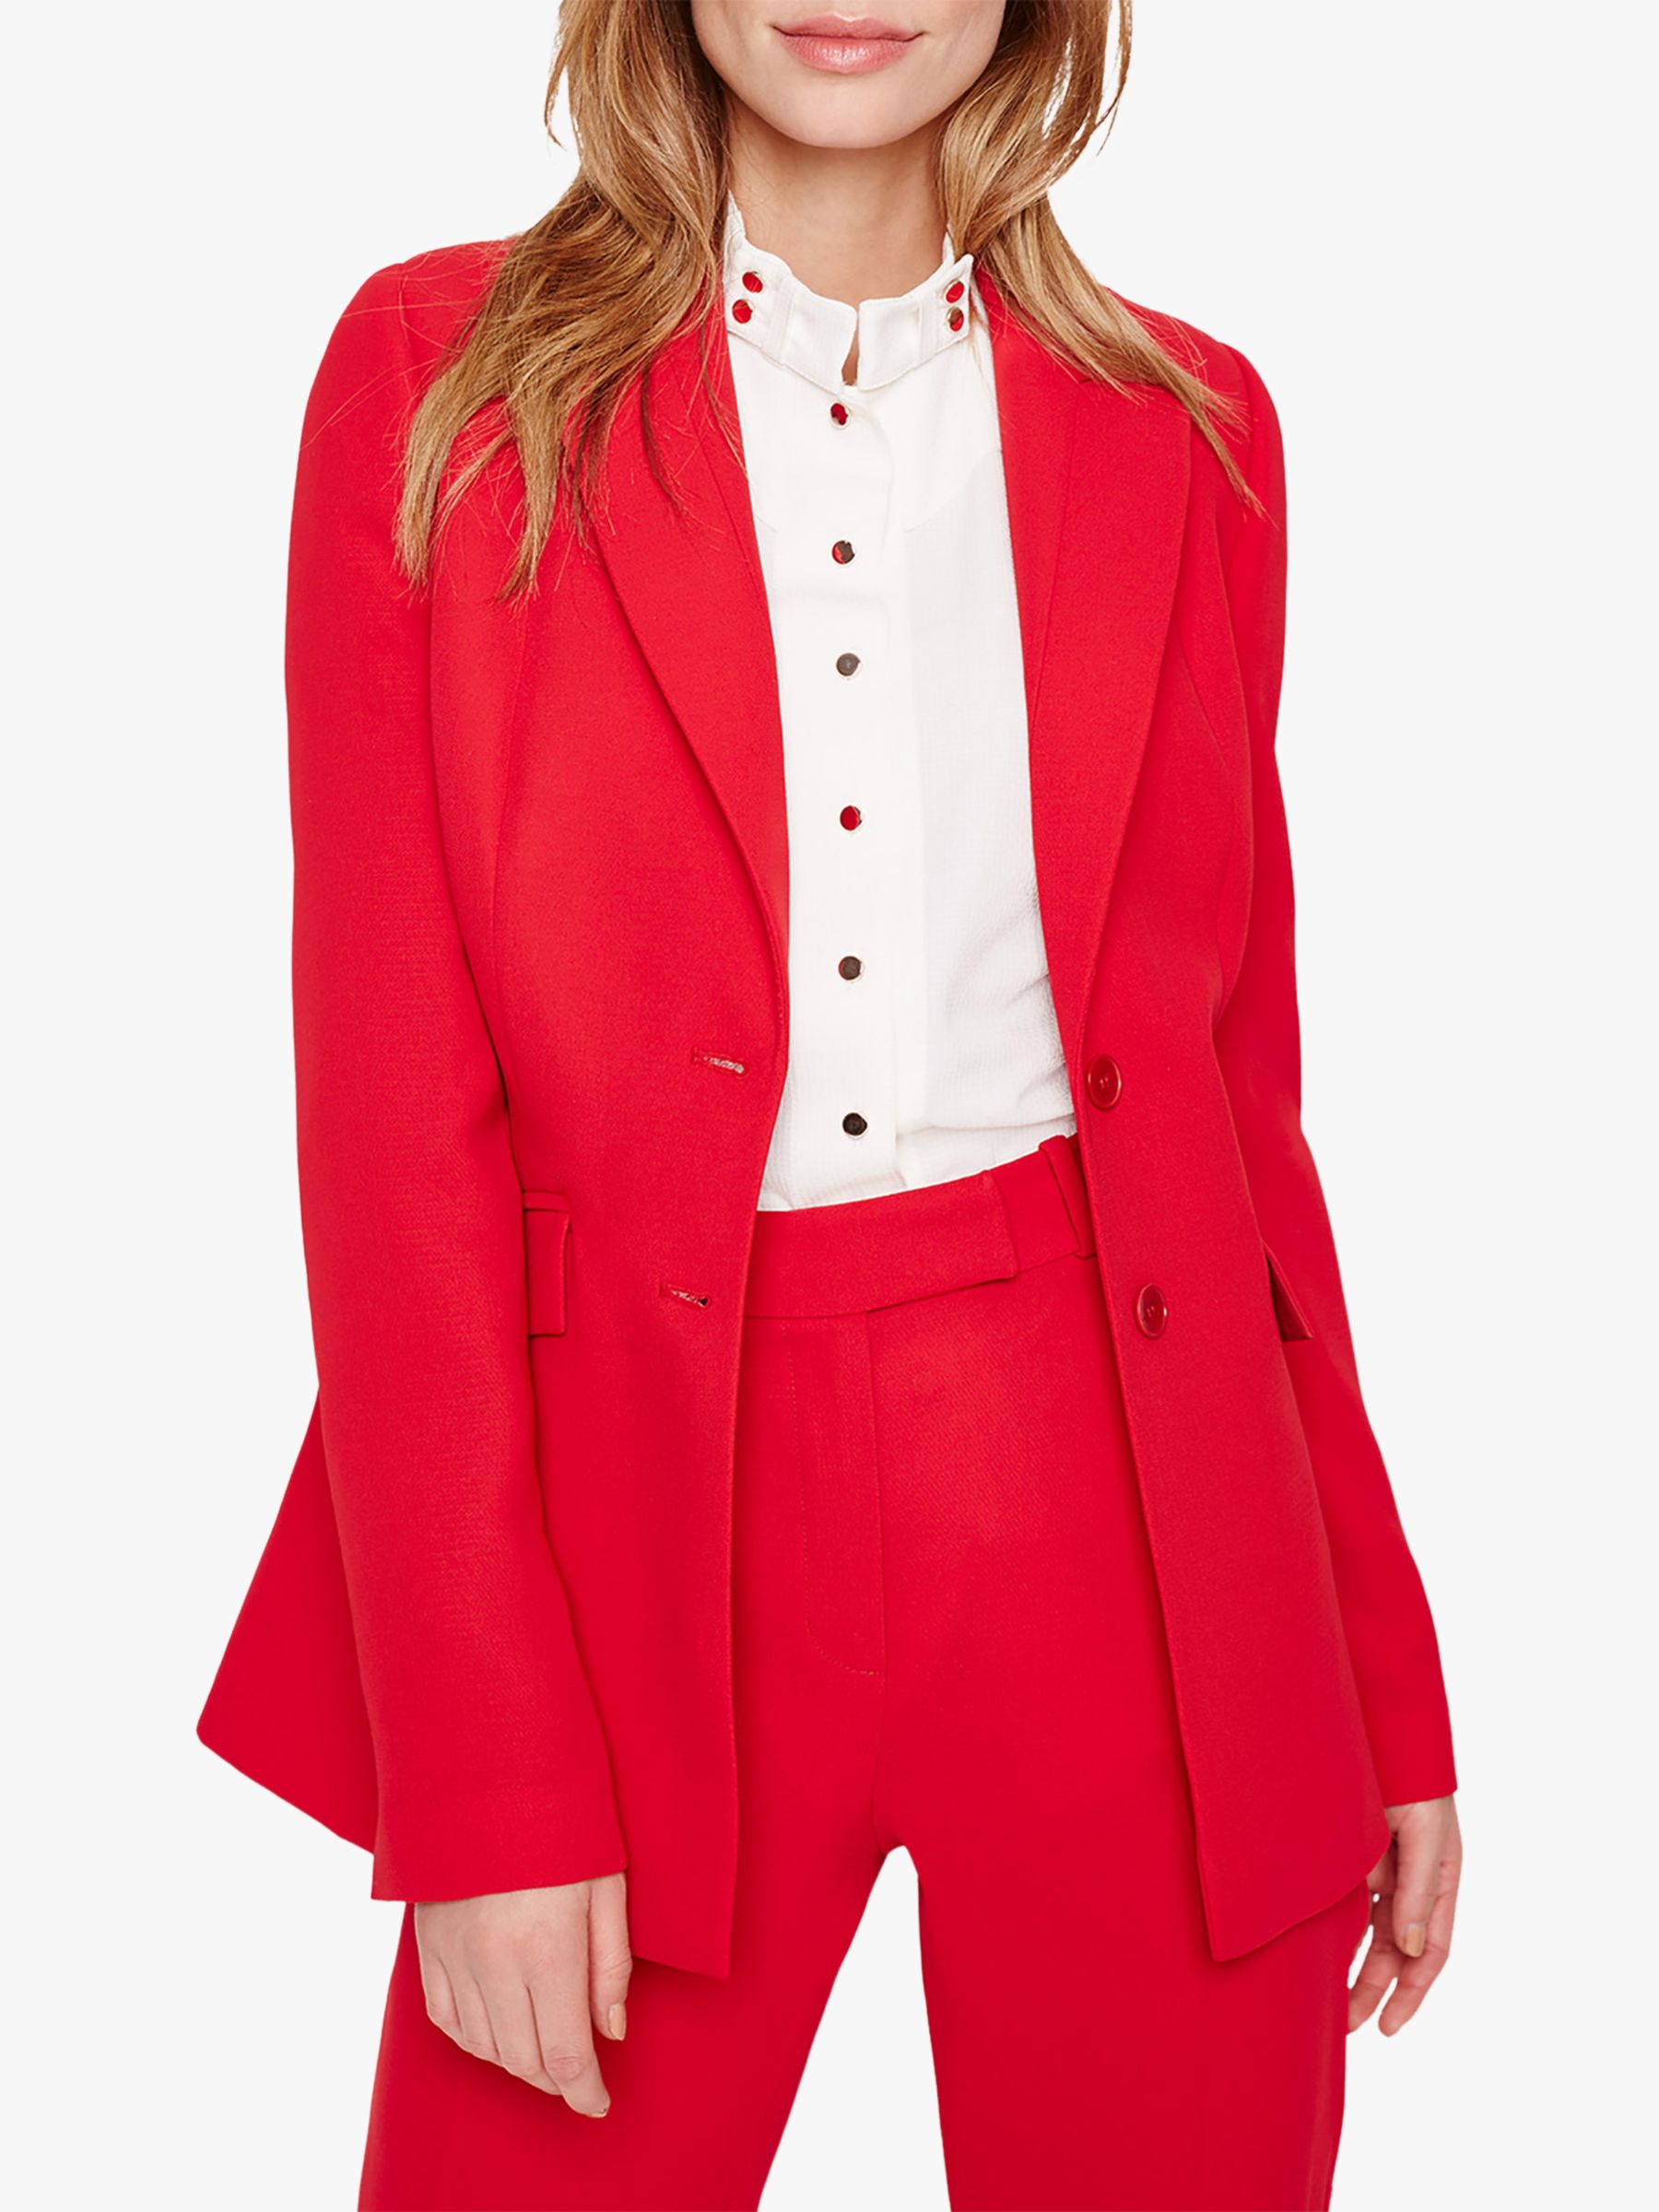 red dress jacket womens